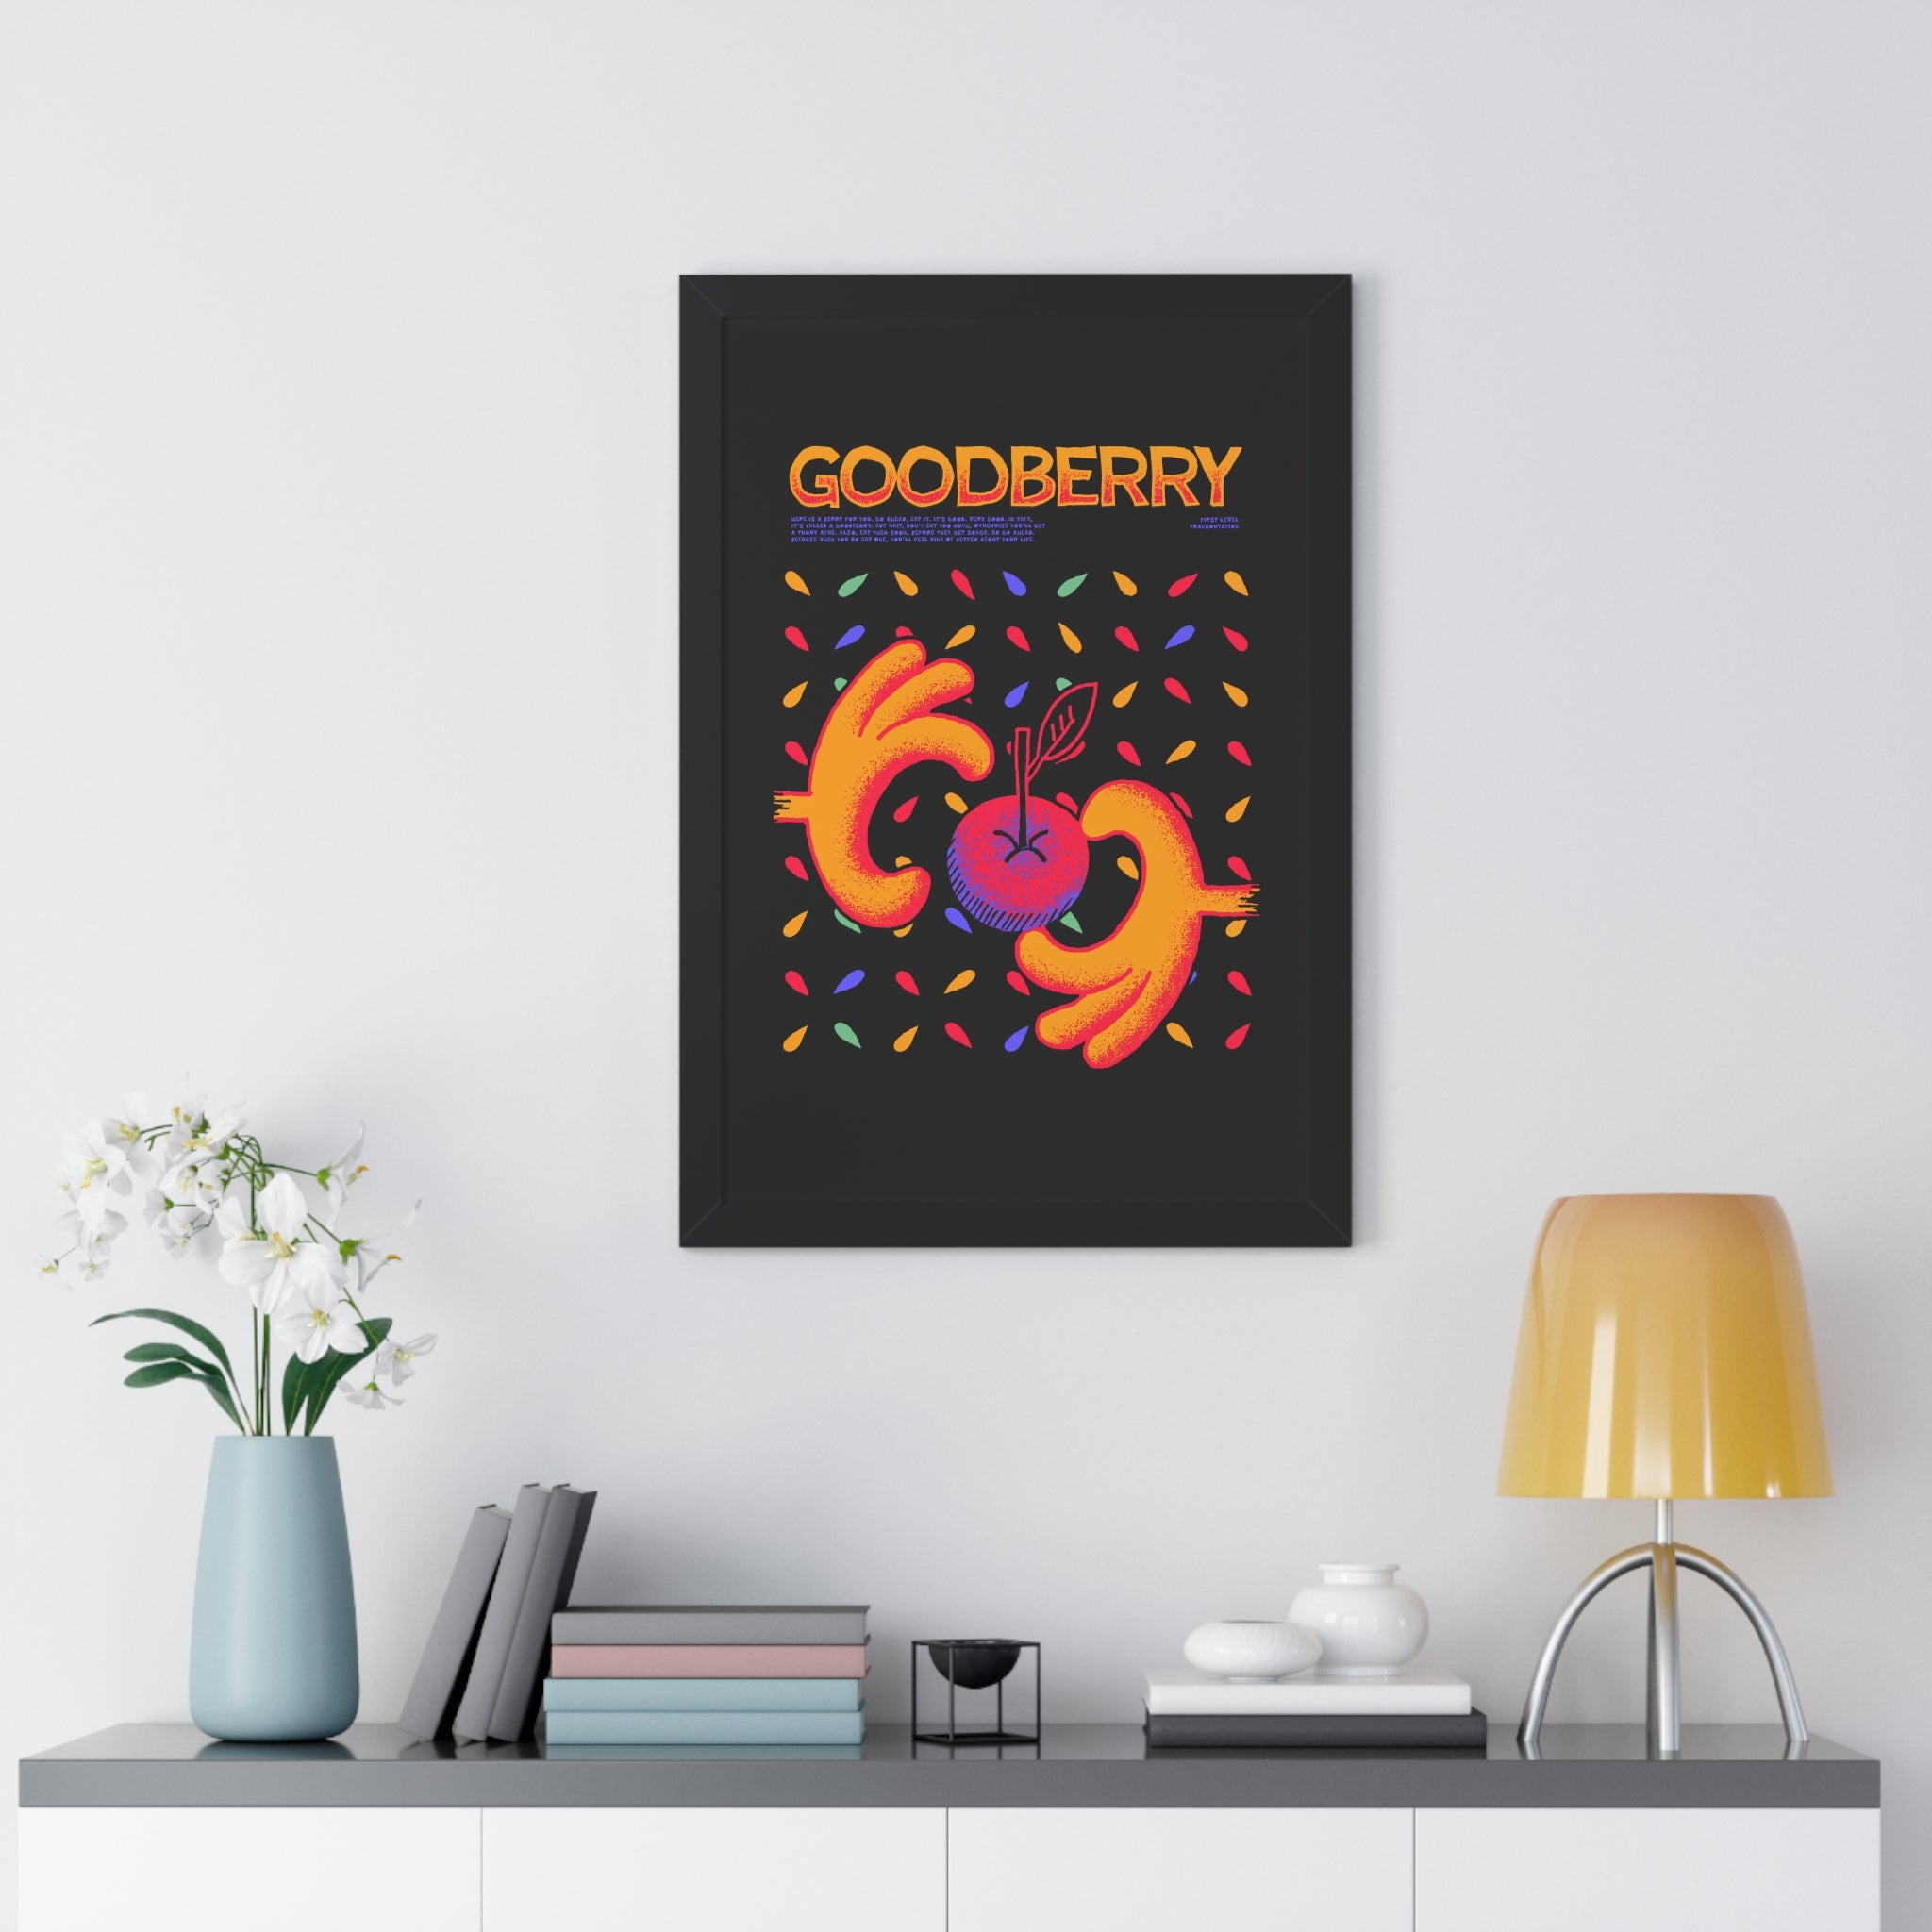 Goodberry | Framed Poster - Framed Poster - Ace of Gnomes - 15559494945426255375